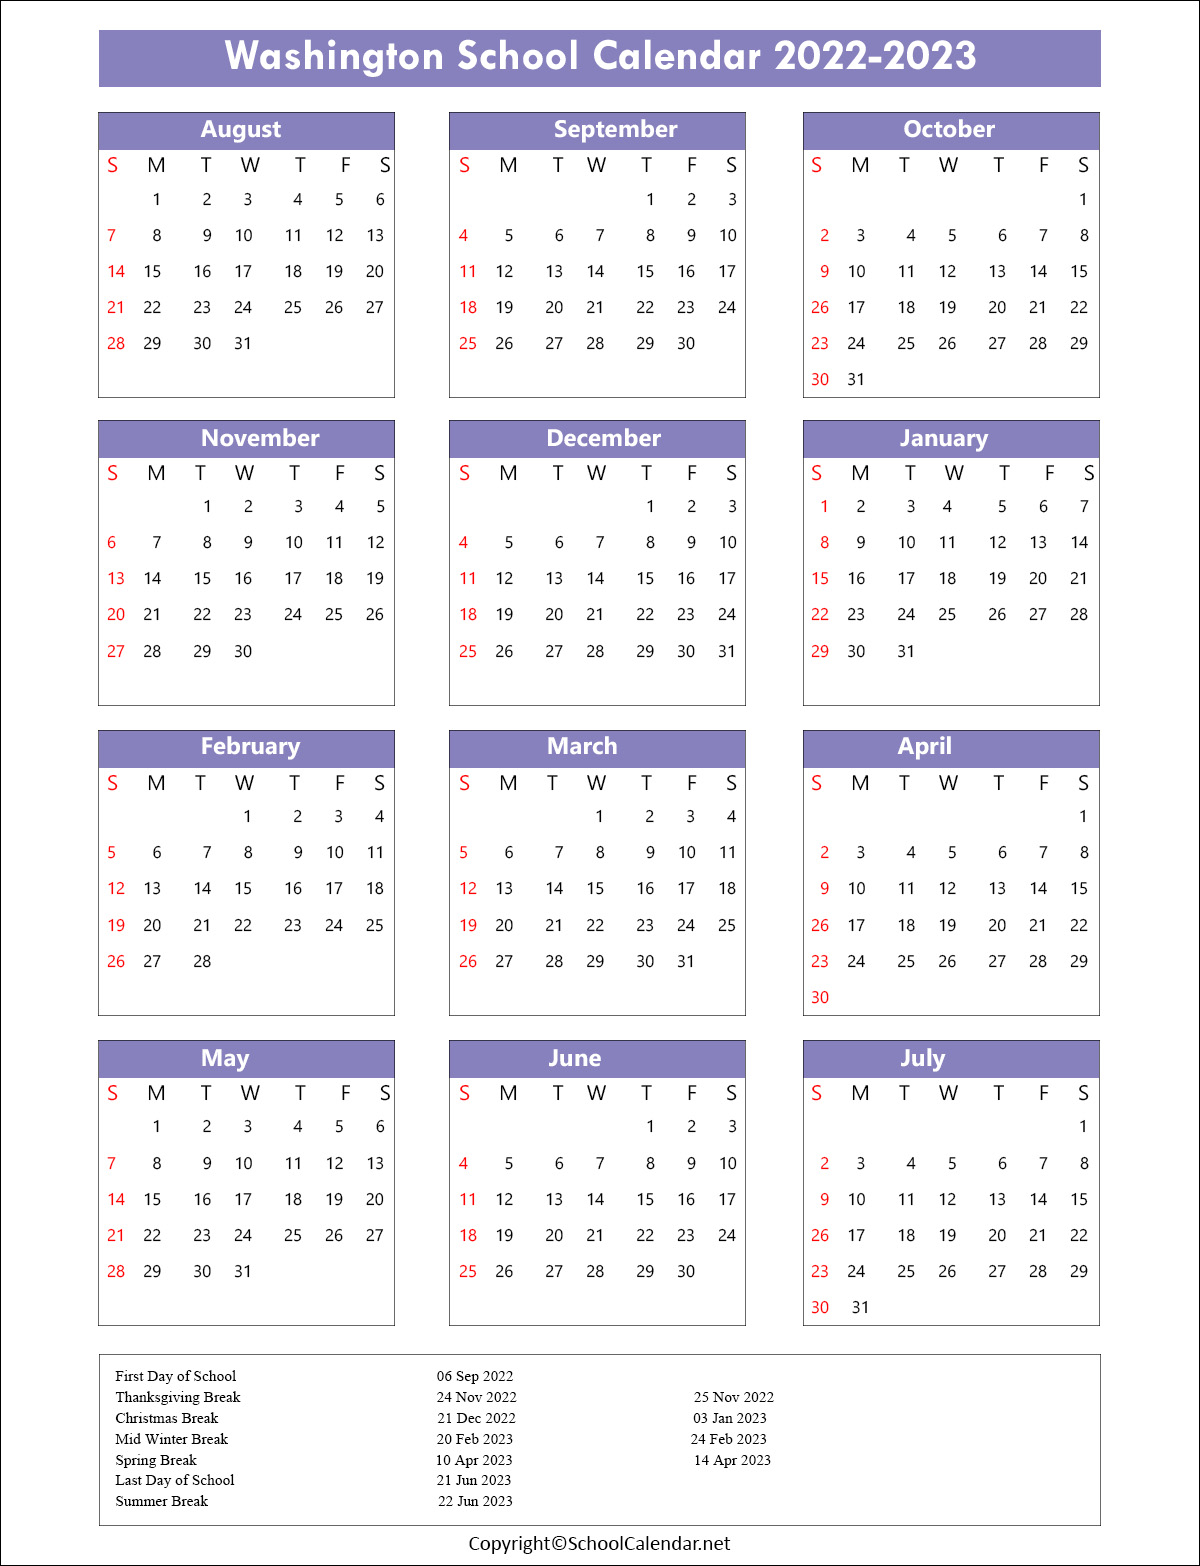 Washington School Calendar 2022